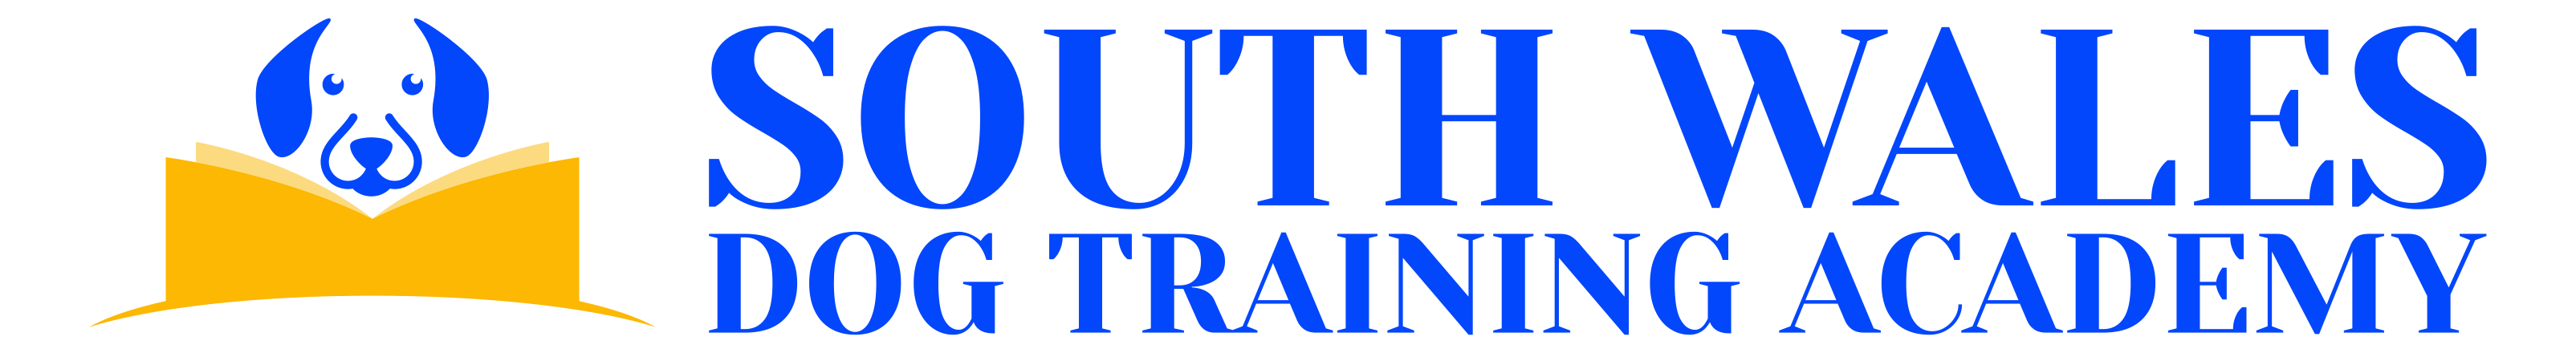 South Wales Dog Training Academy